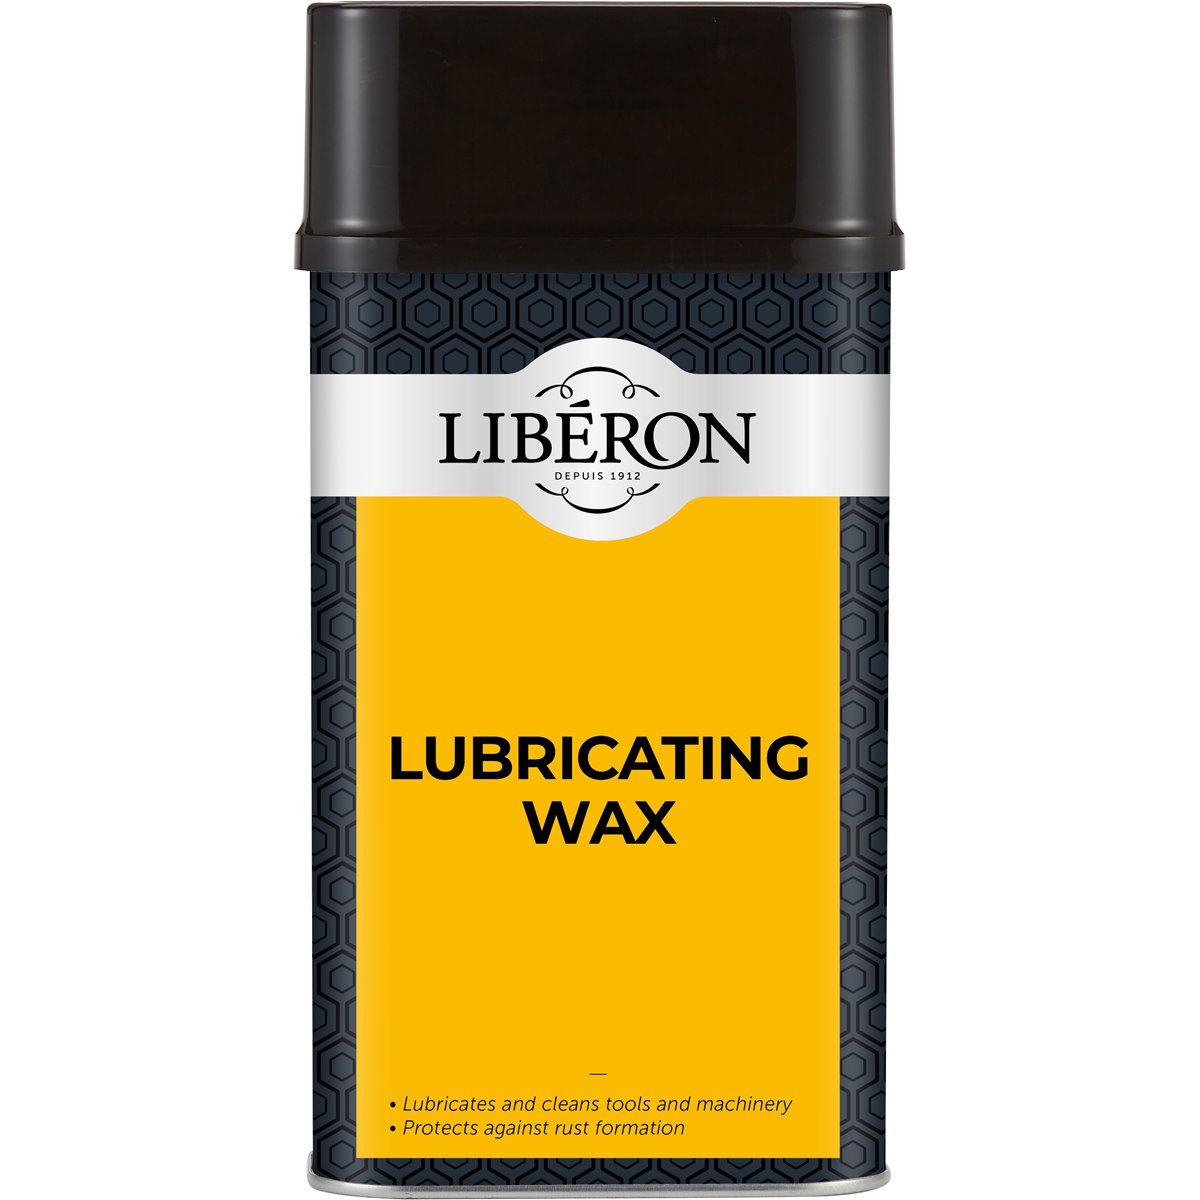 Liberon Lubricating Wax 1 Litre